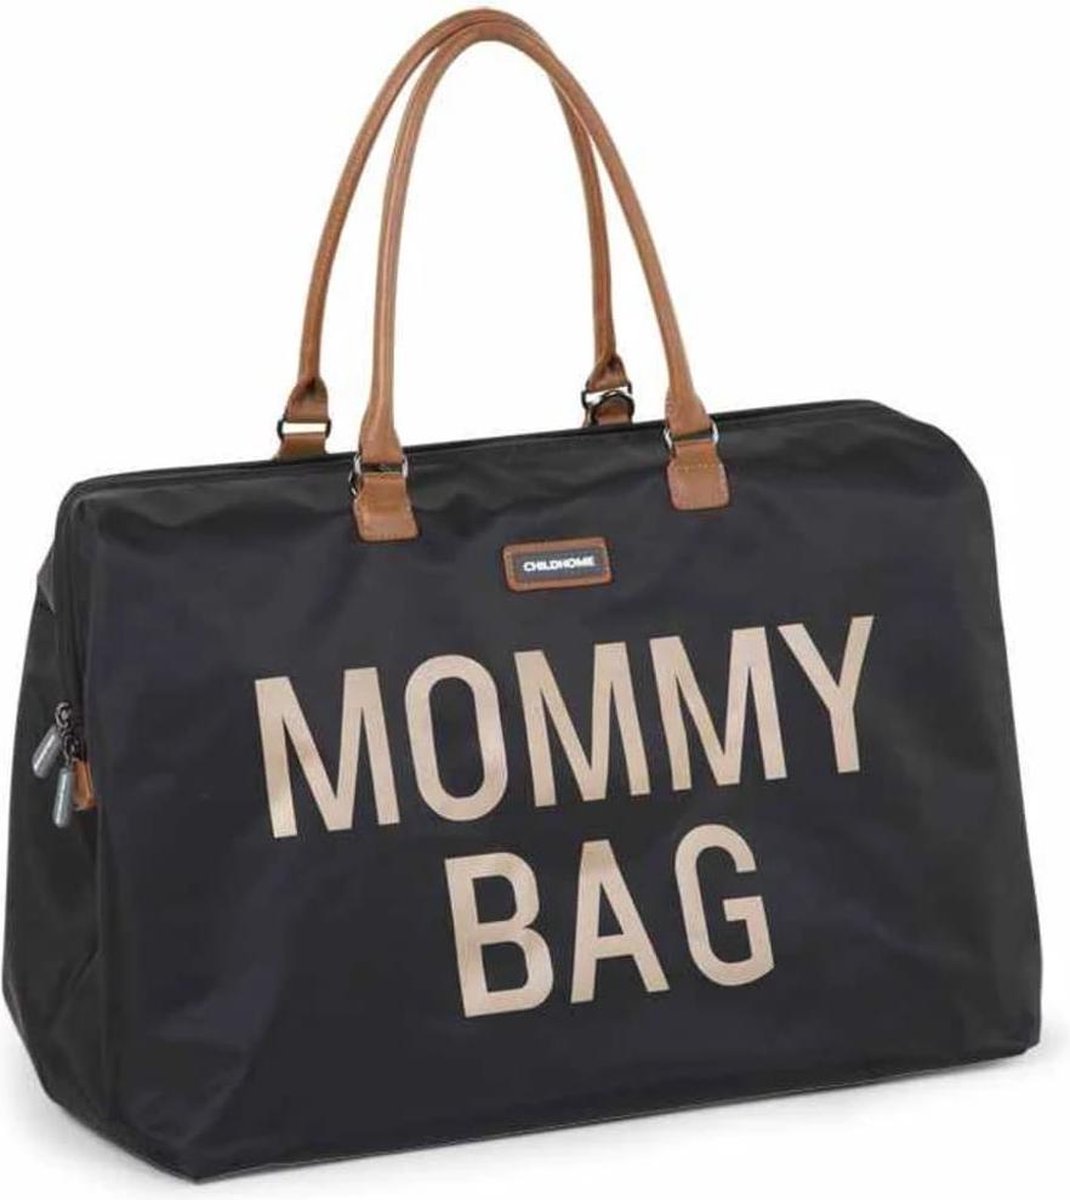 Childhome - Mommy Bag Groot - Luiertas - Zwart